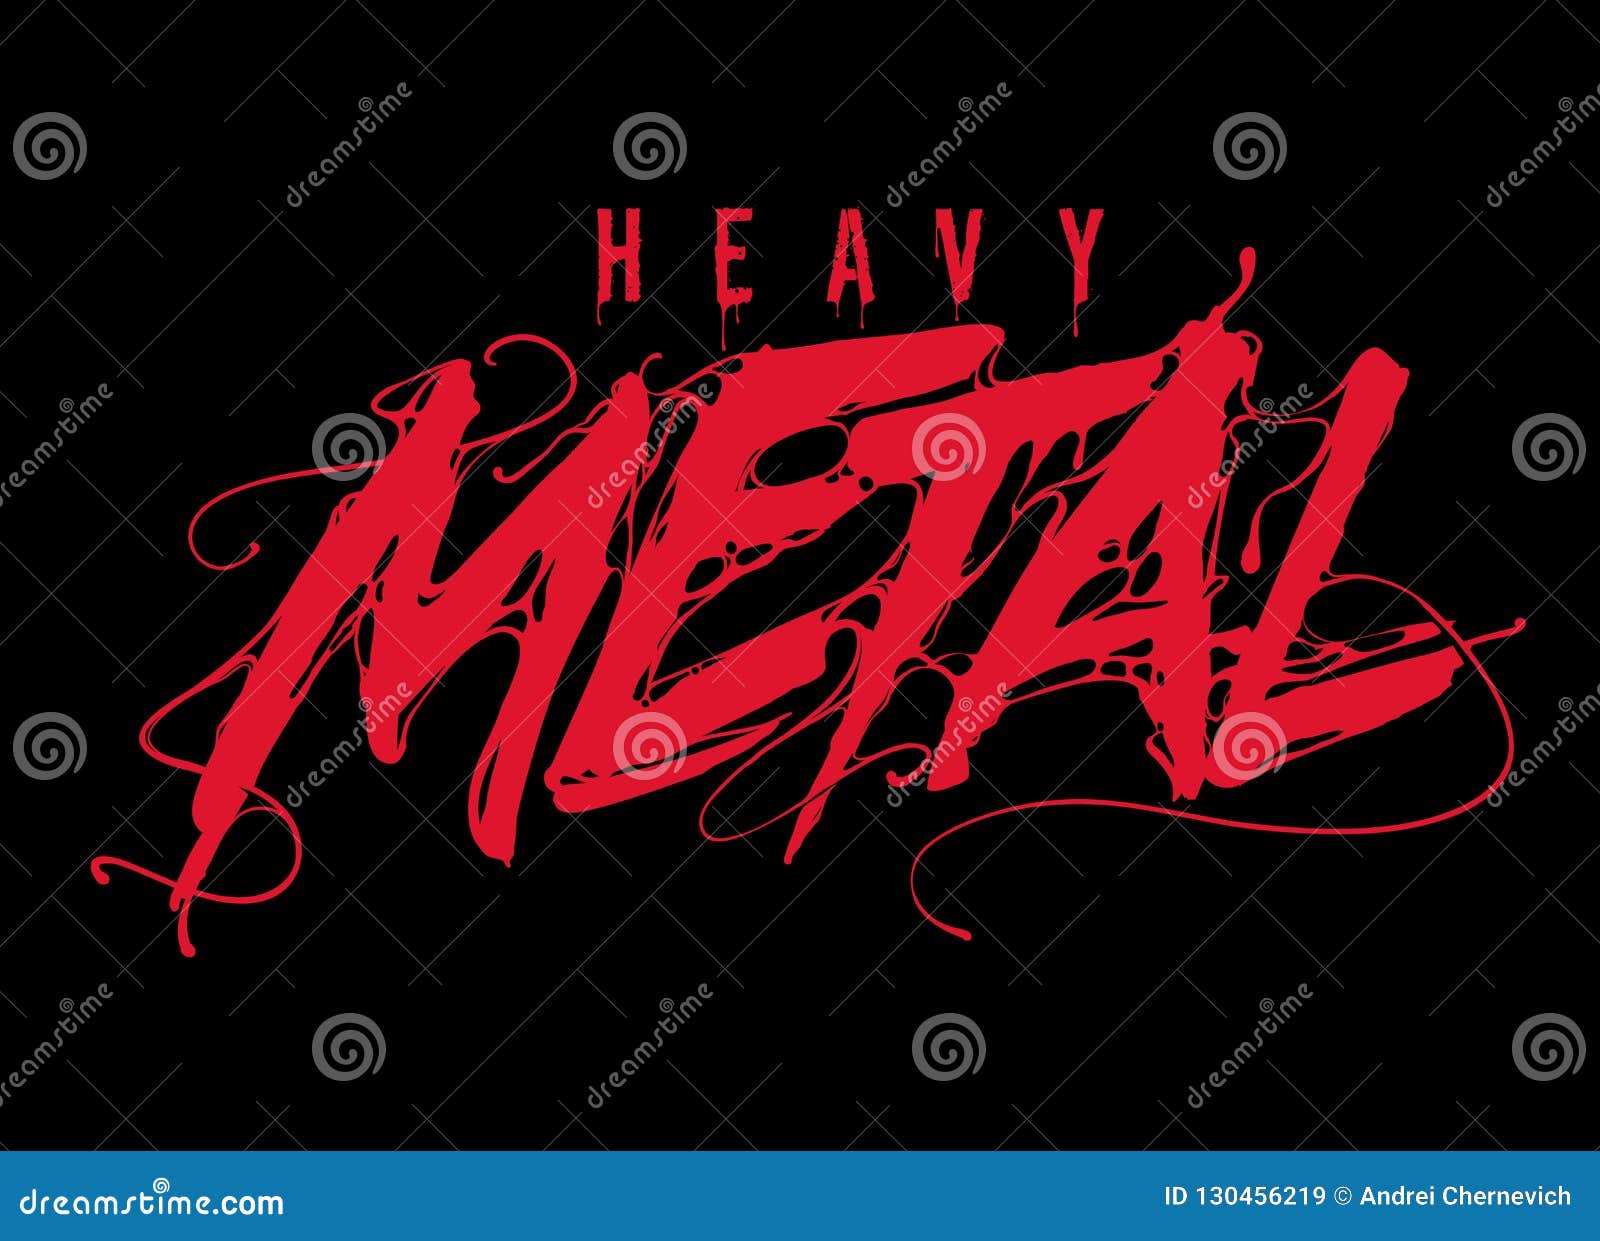 heavy metal lettering on black background